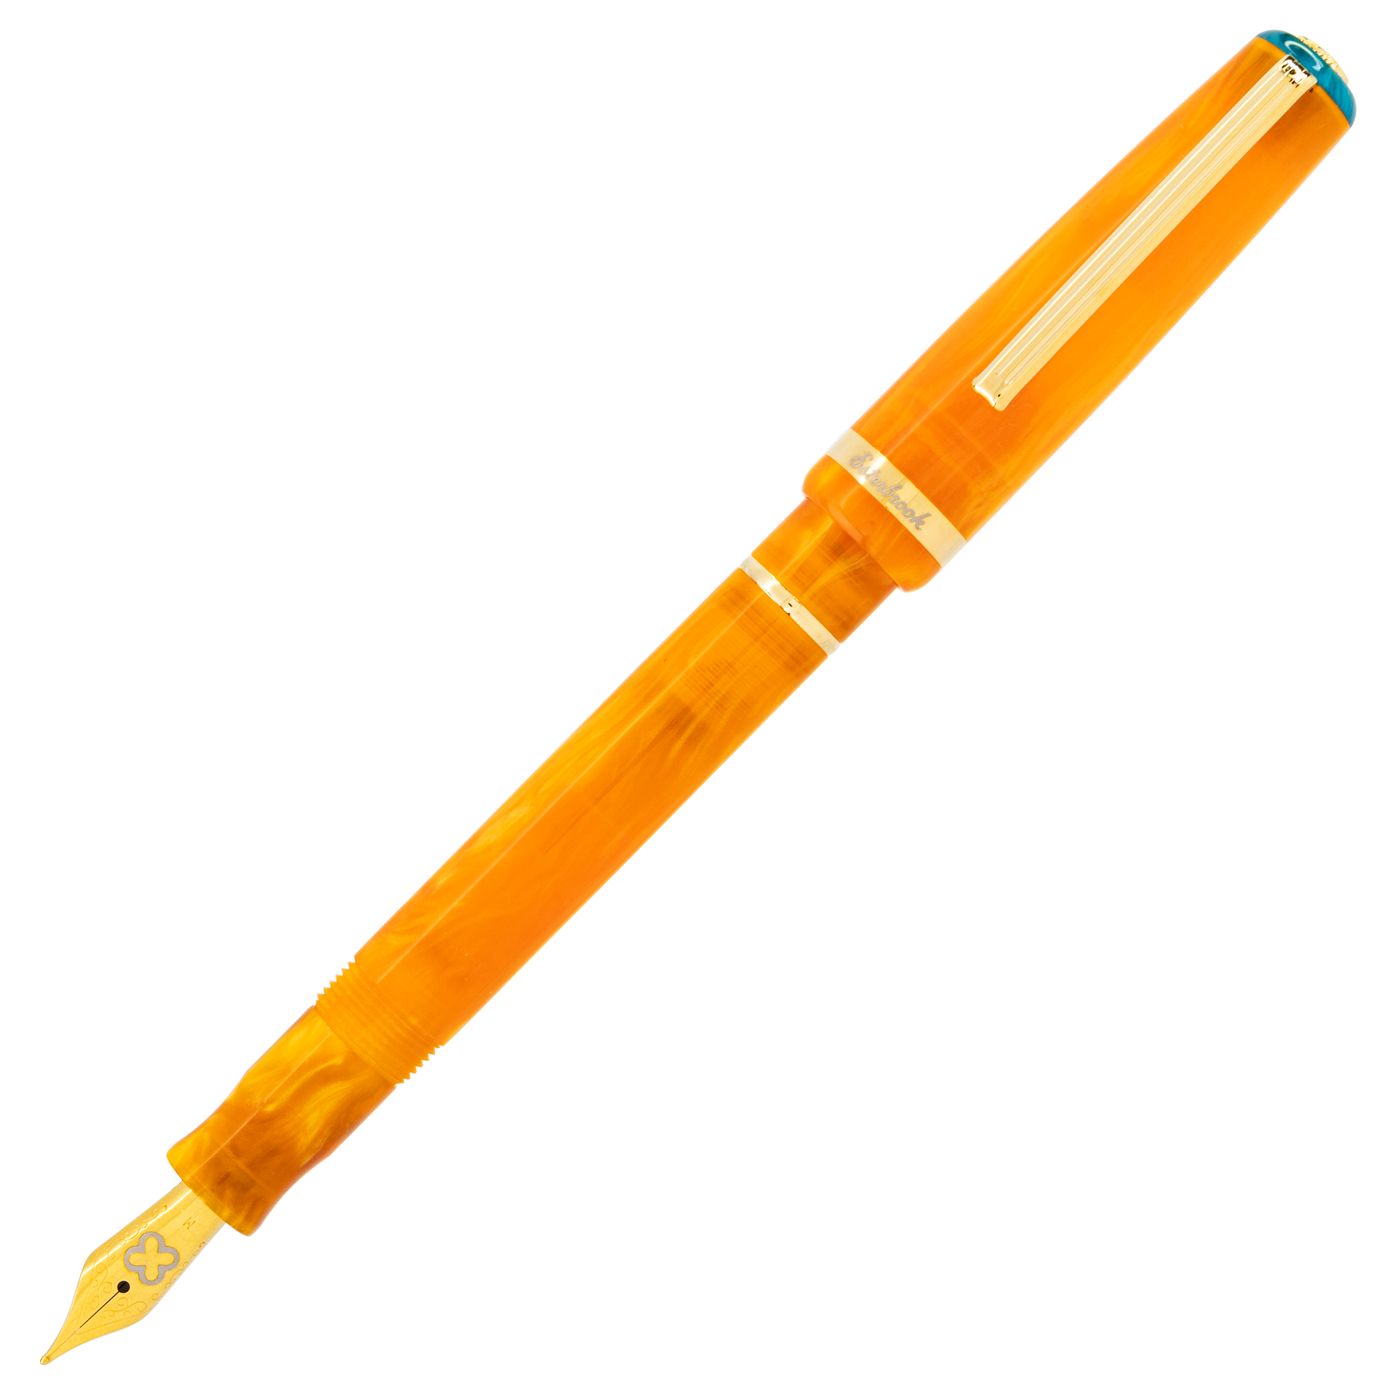 Esterbrook JR Pocket Pen Paradise Collection- Orange Sunset Fountain Pen